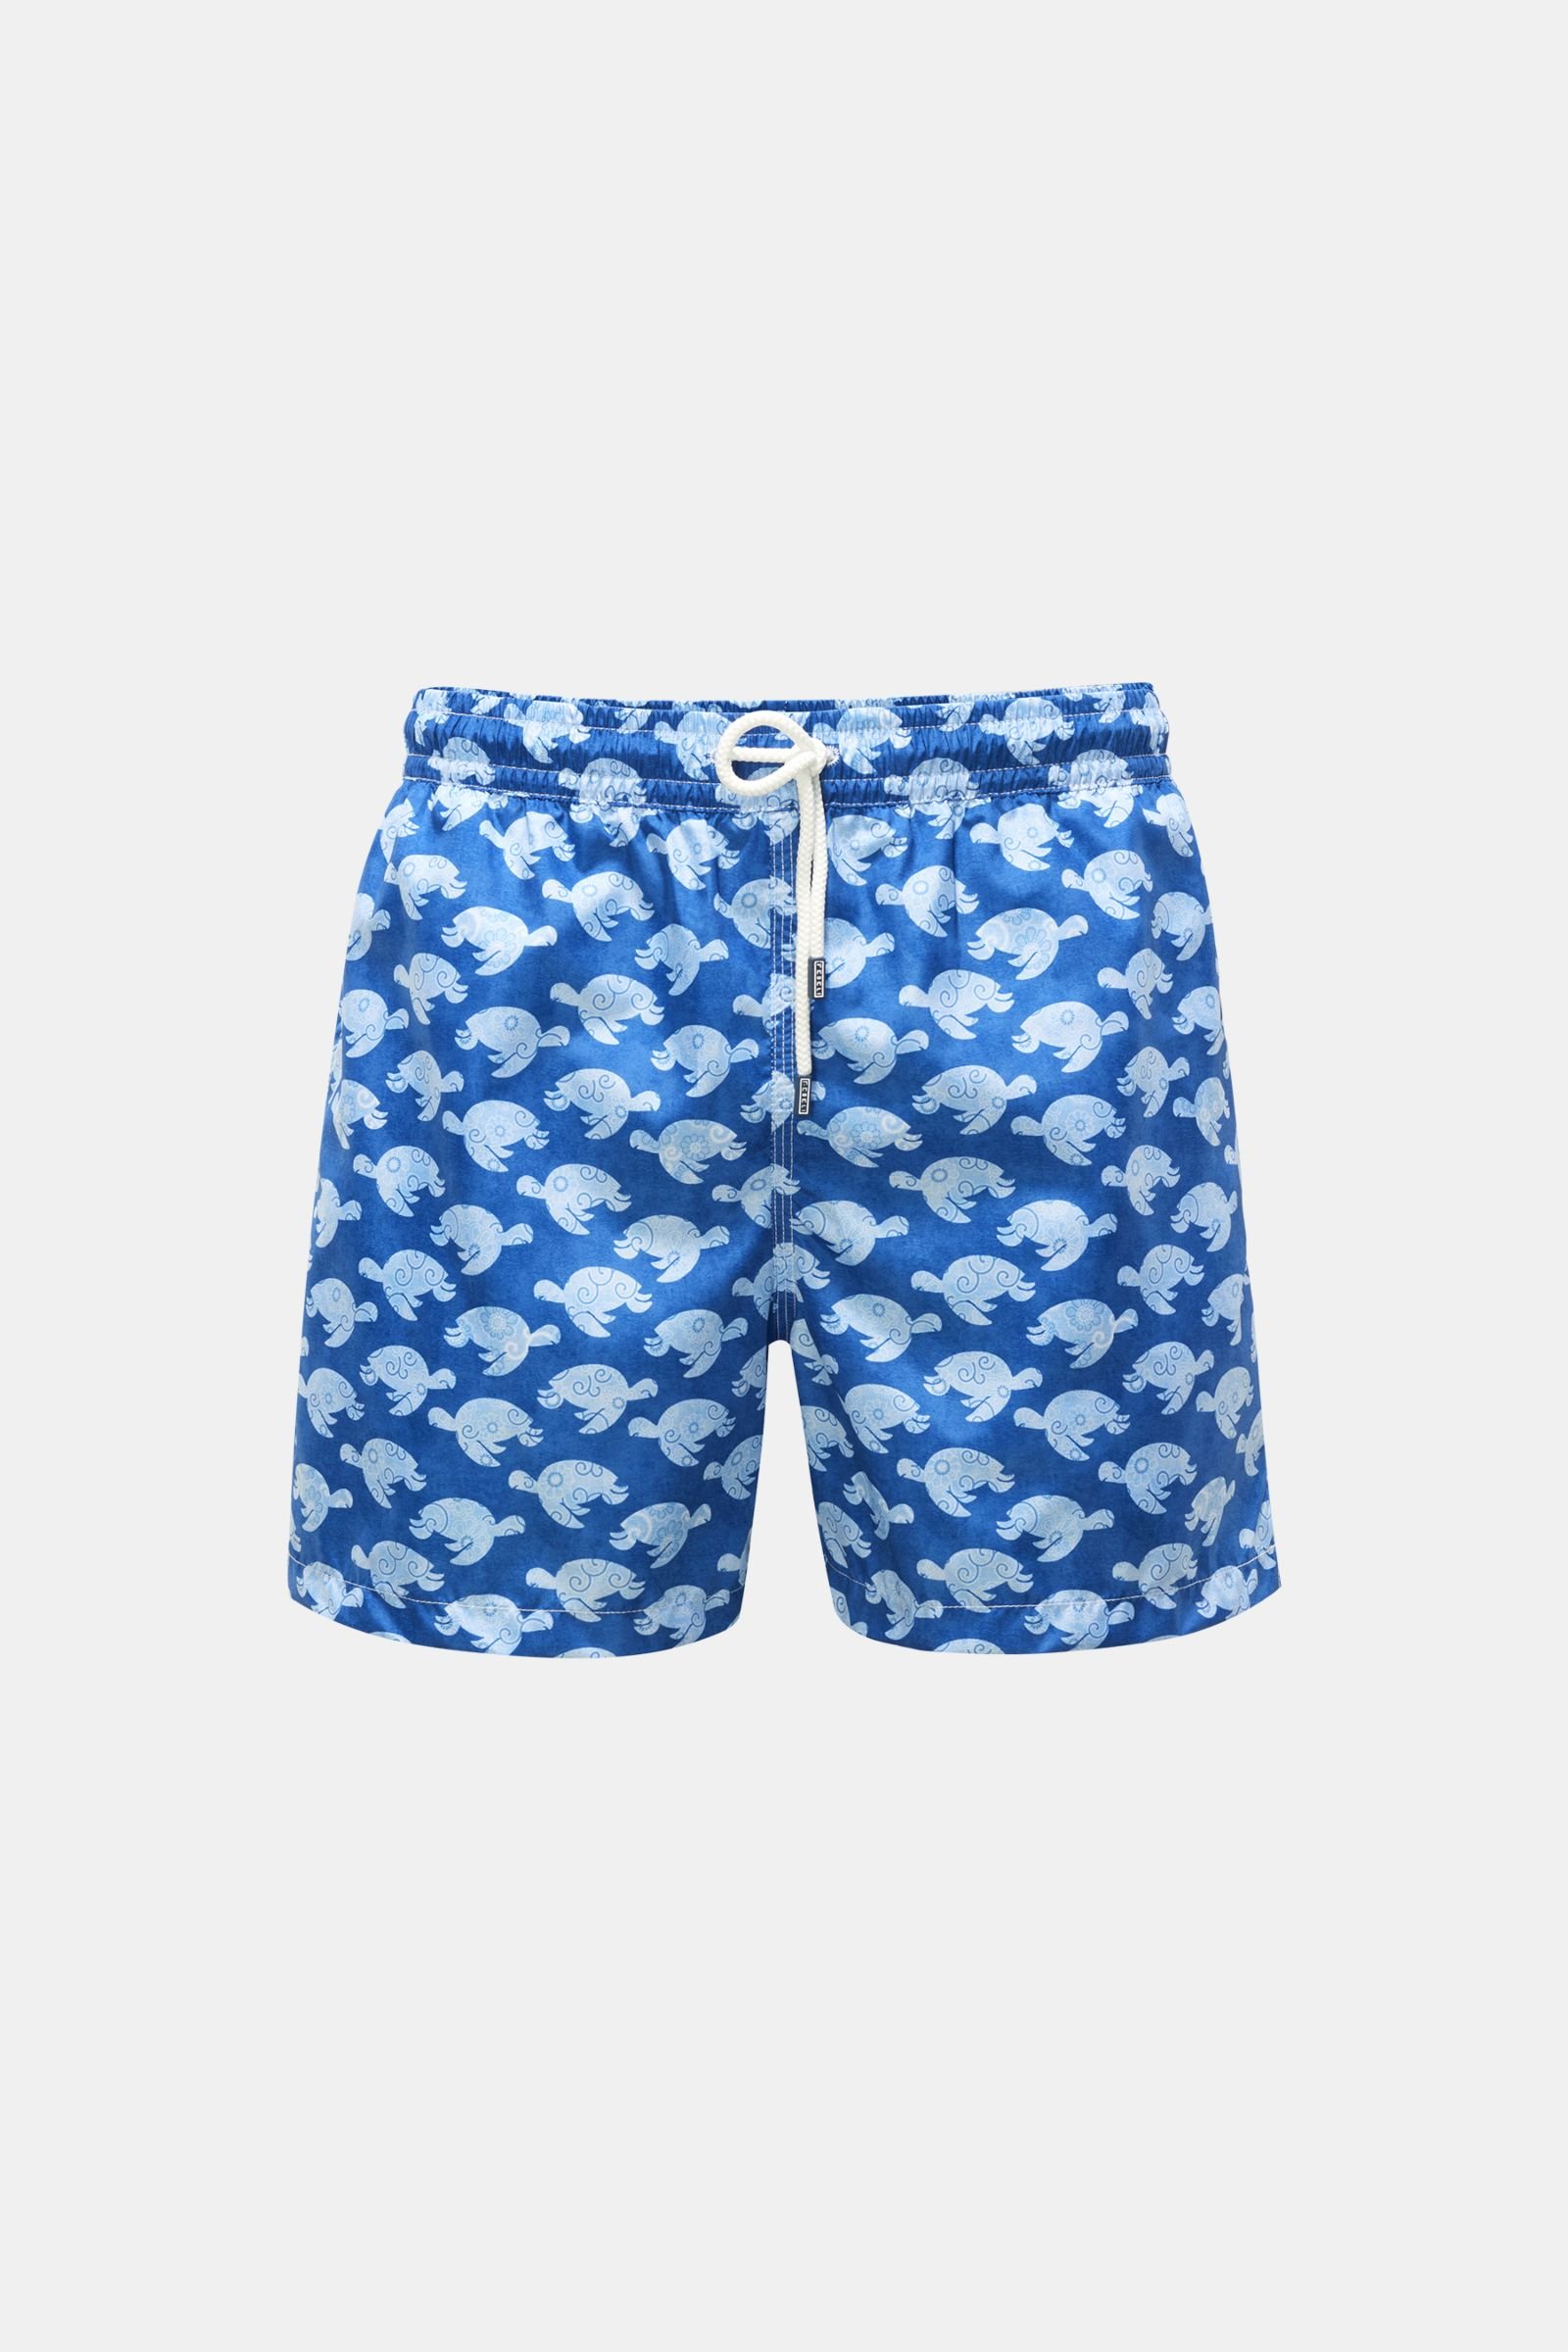 Swim shorts 'Madeira Airstop' dark blue/smoky blue patterned